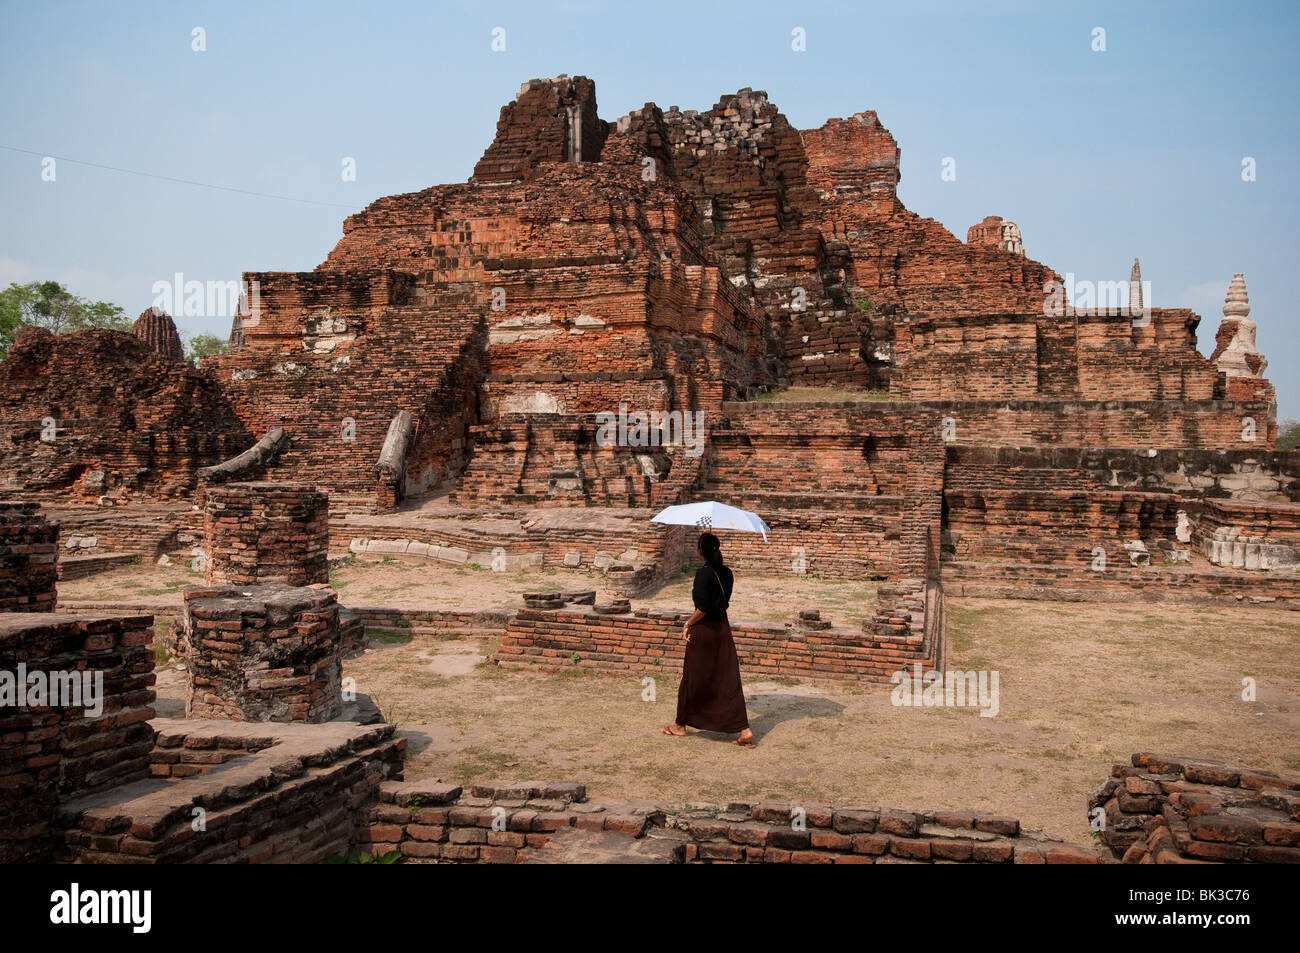 Woman visitor with umbrella at Wat Mahathat Buddhist temple ruins, Ayutthaya, Thailand. Stock Photo